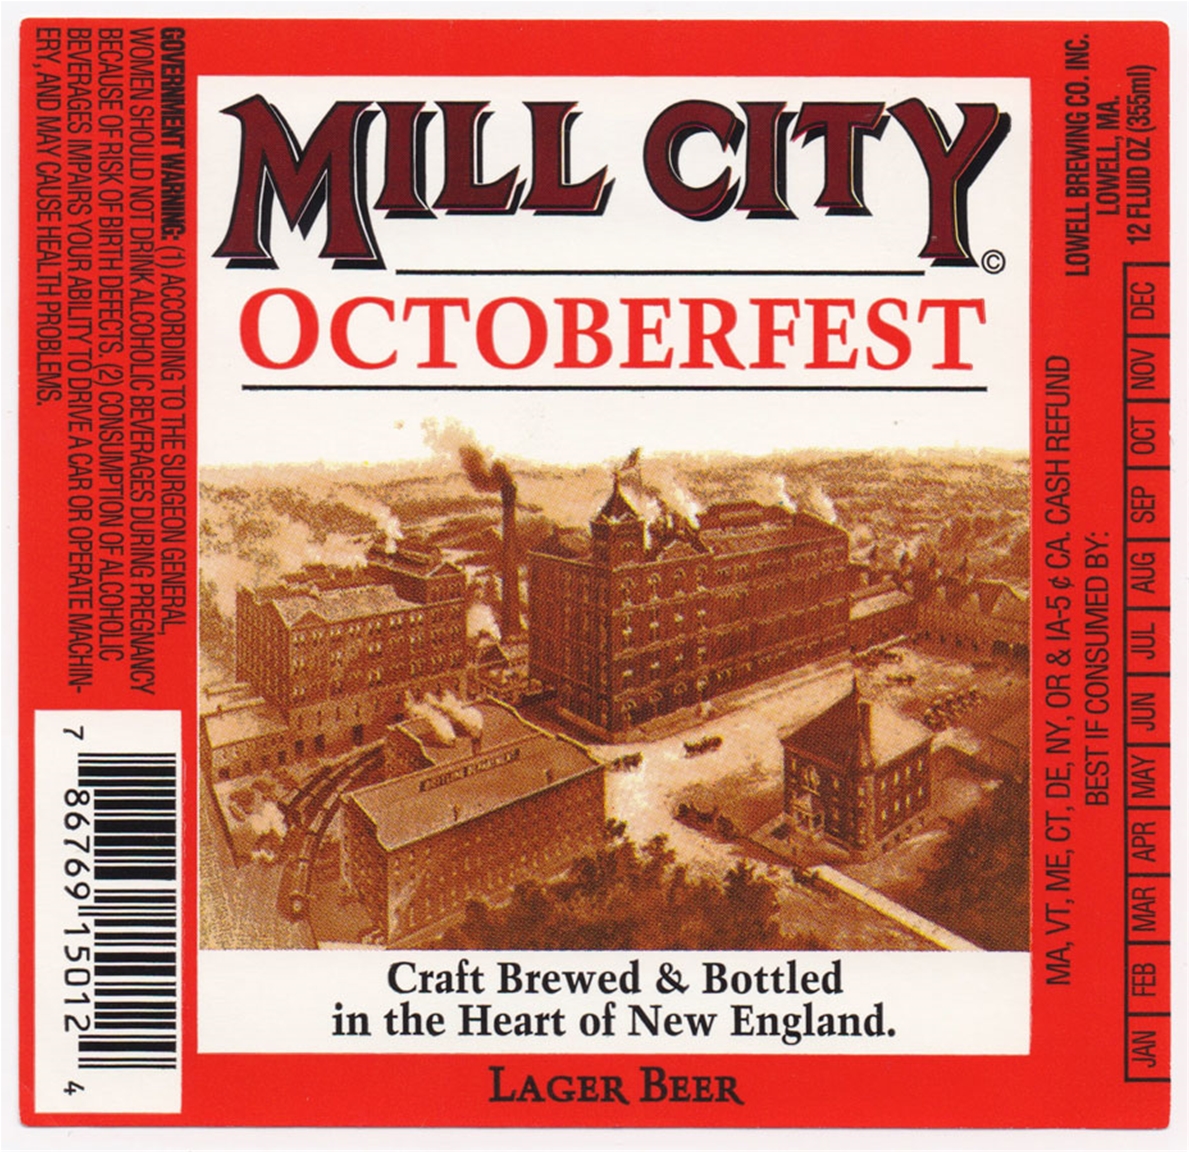 Mill City Octoberfest Beer Label